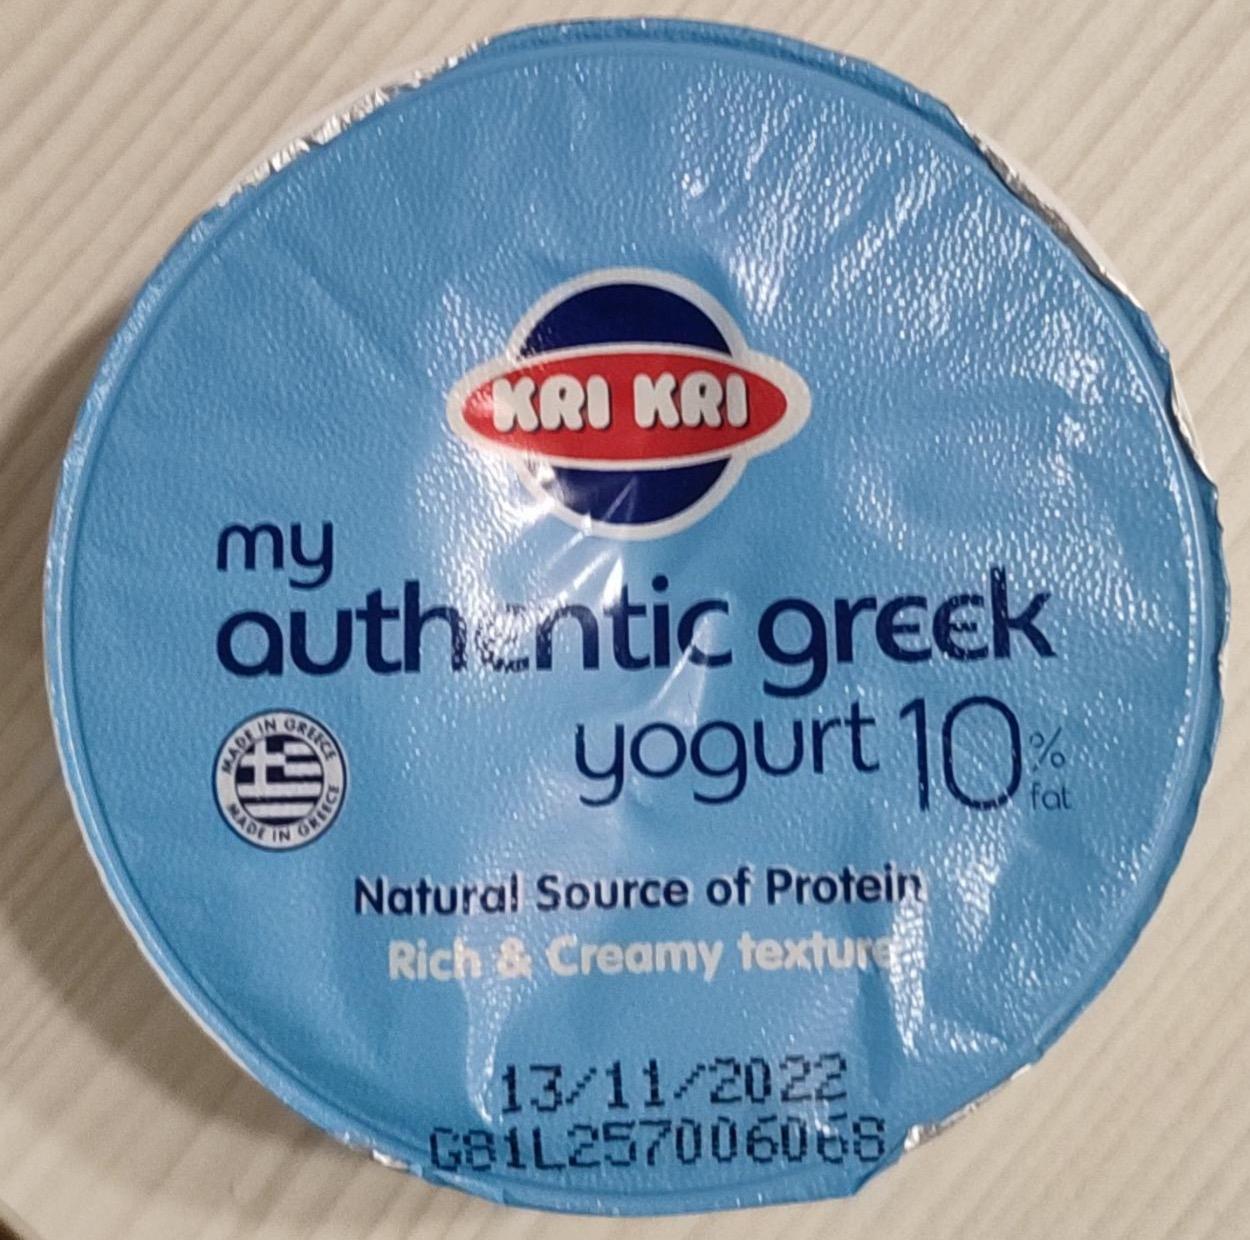 Képek - Grécky jogurt 10% Kri kri